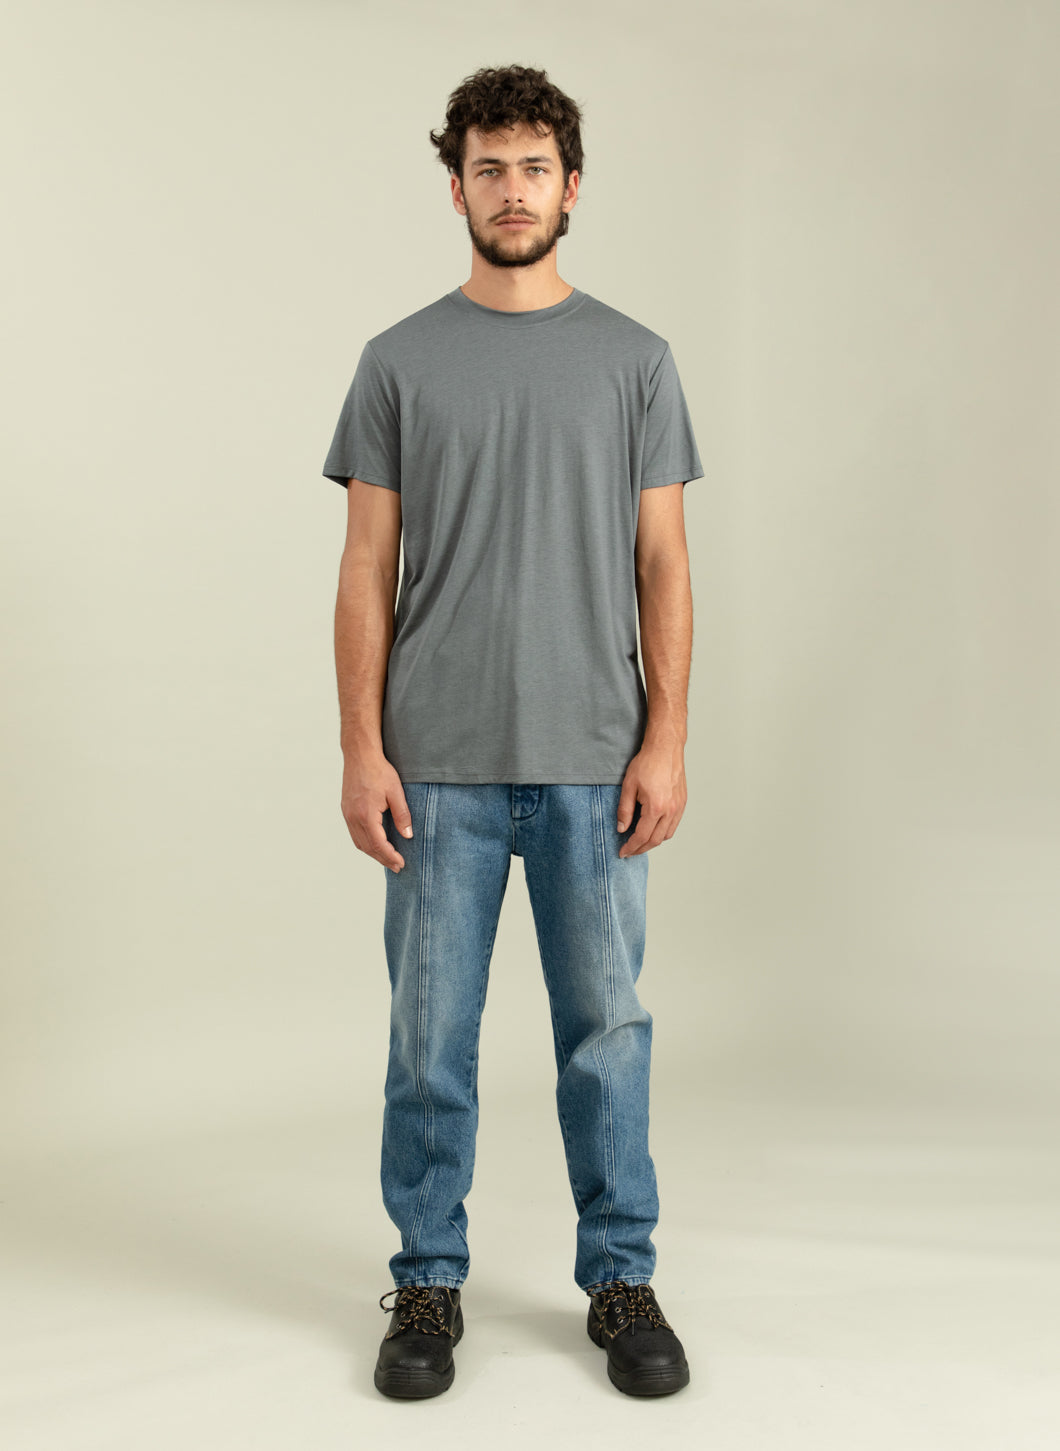 Short Sleeve T-Shirt in Lead Grey Eucalyptus & Cotton